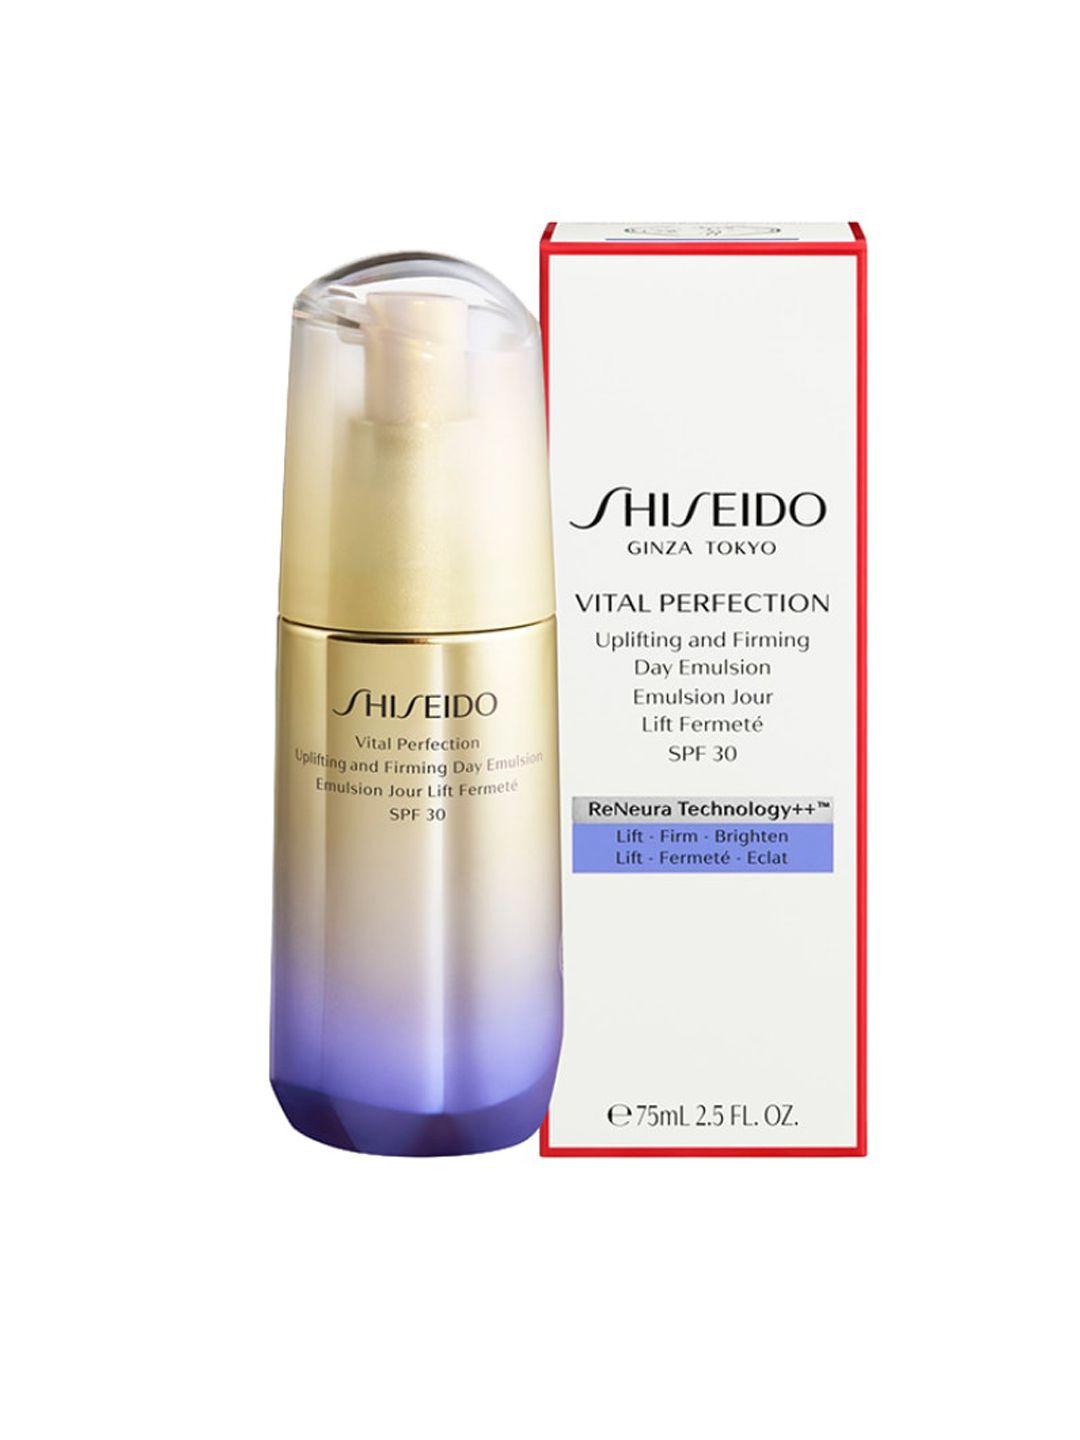 shiseido vital perfection uplifting & firming day emulsion face moisturizer